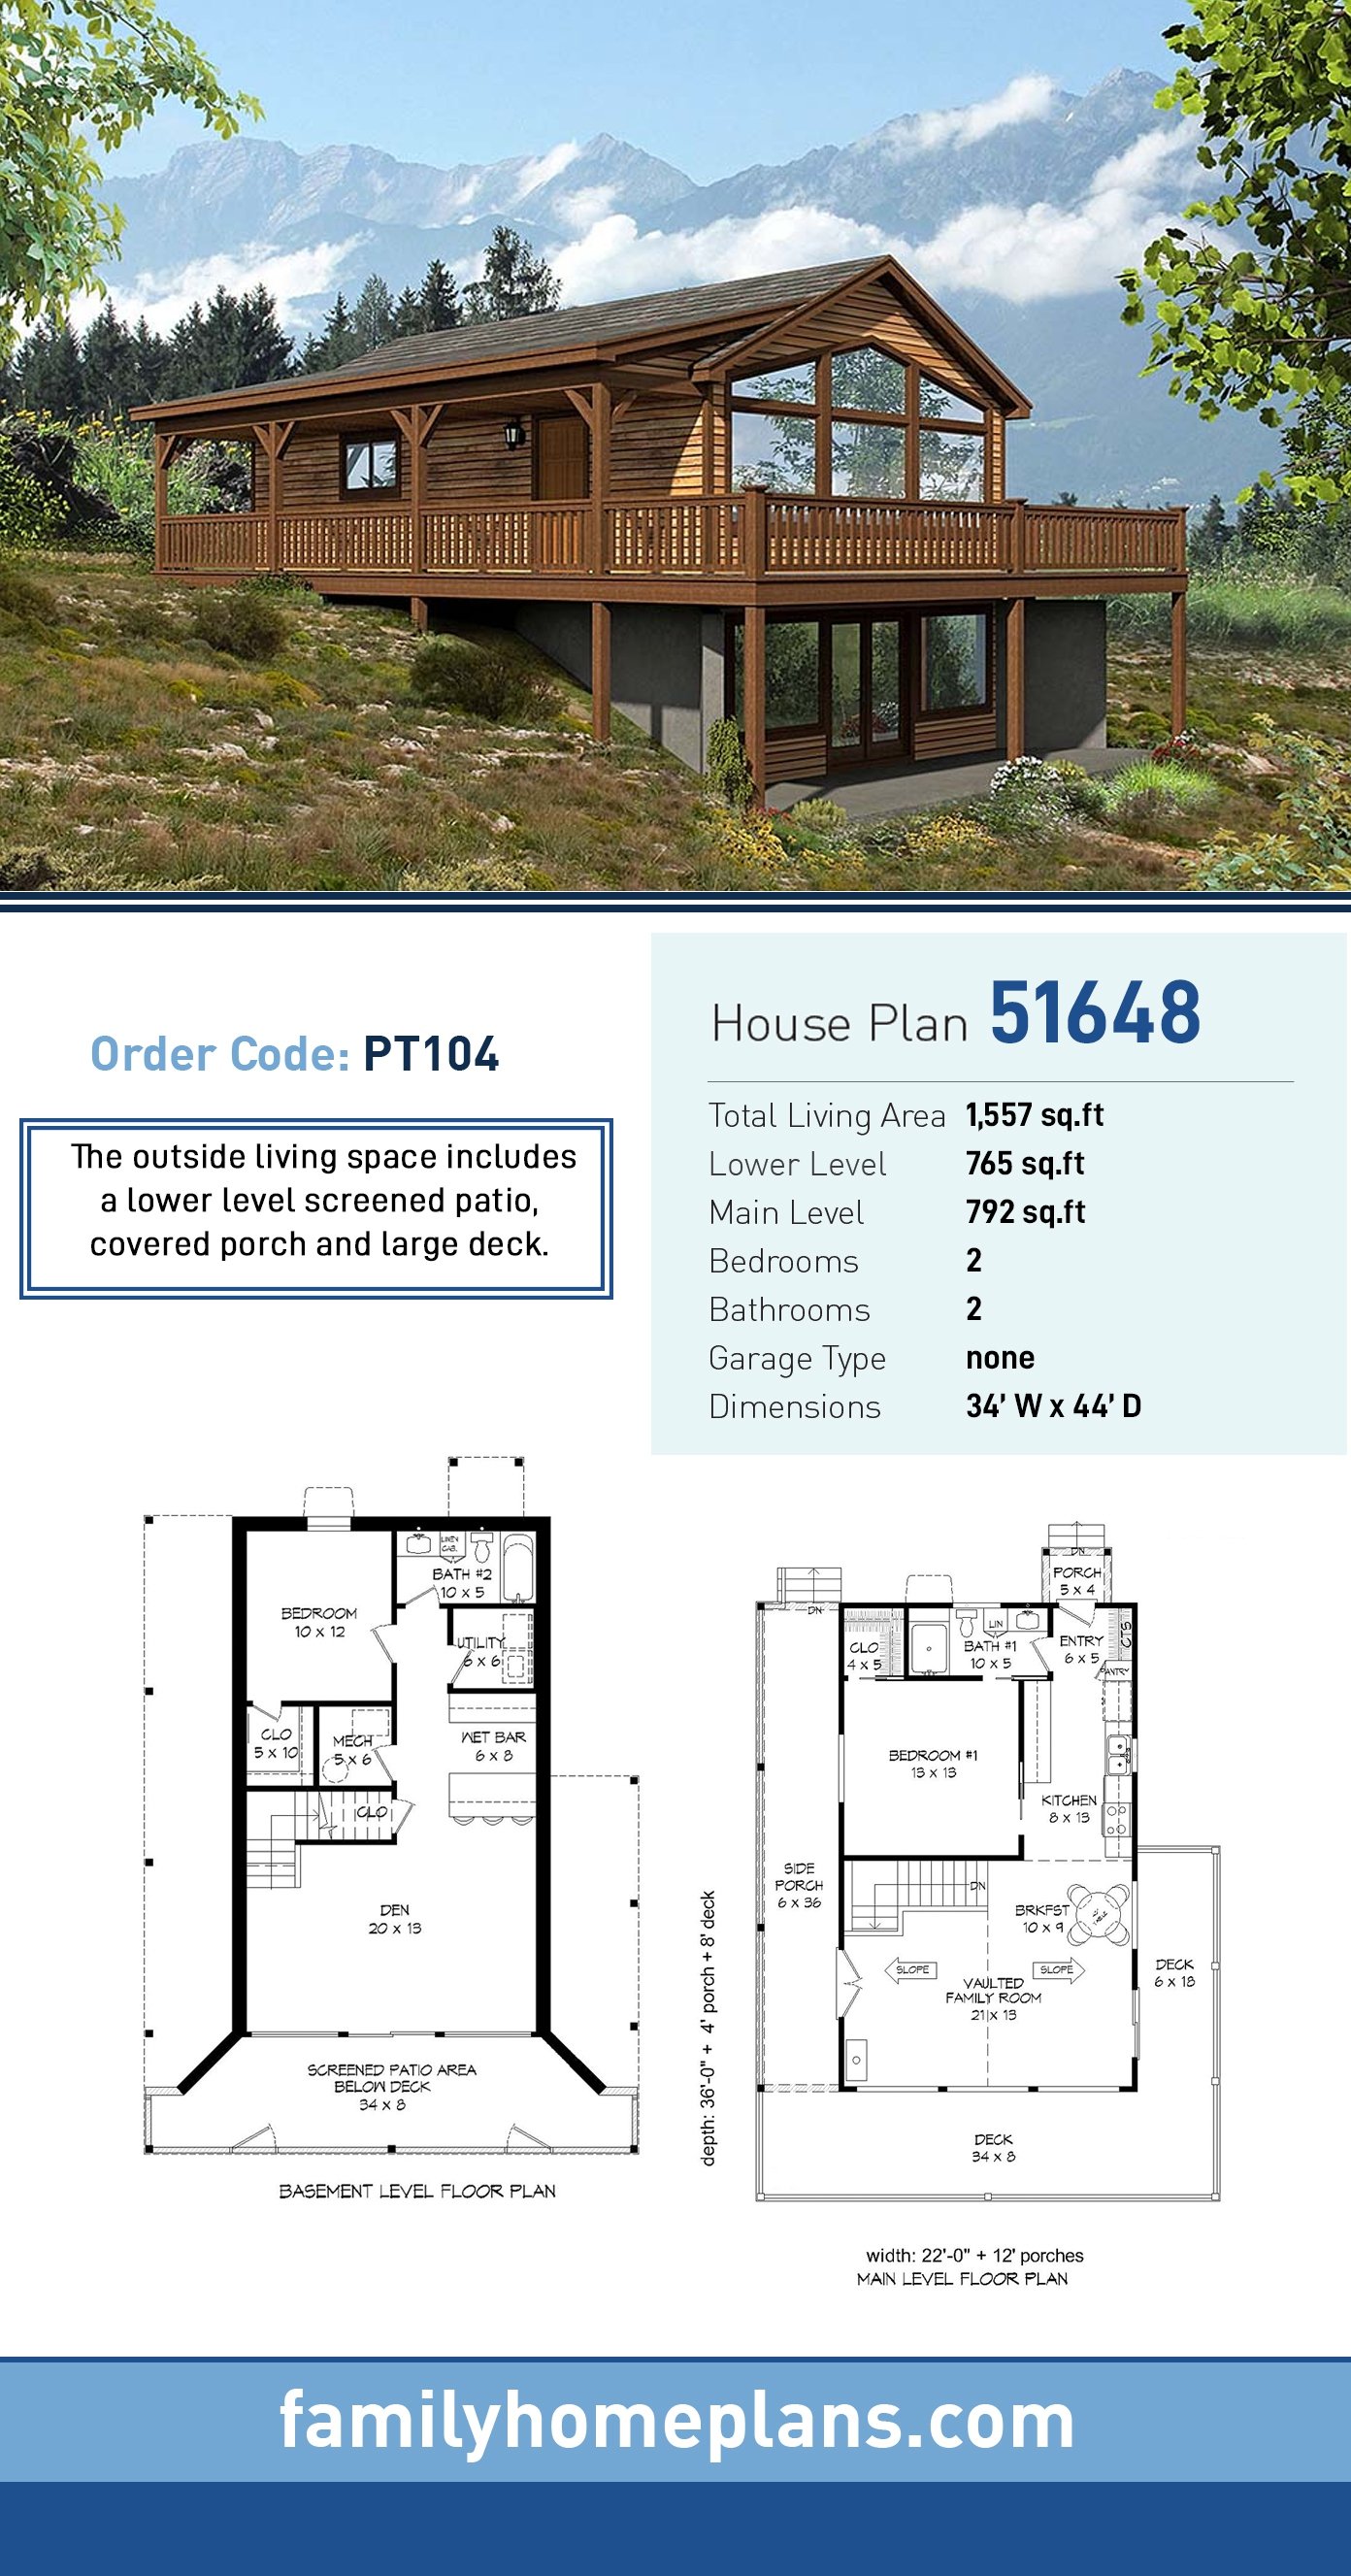 House Plan 51648